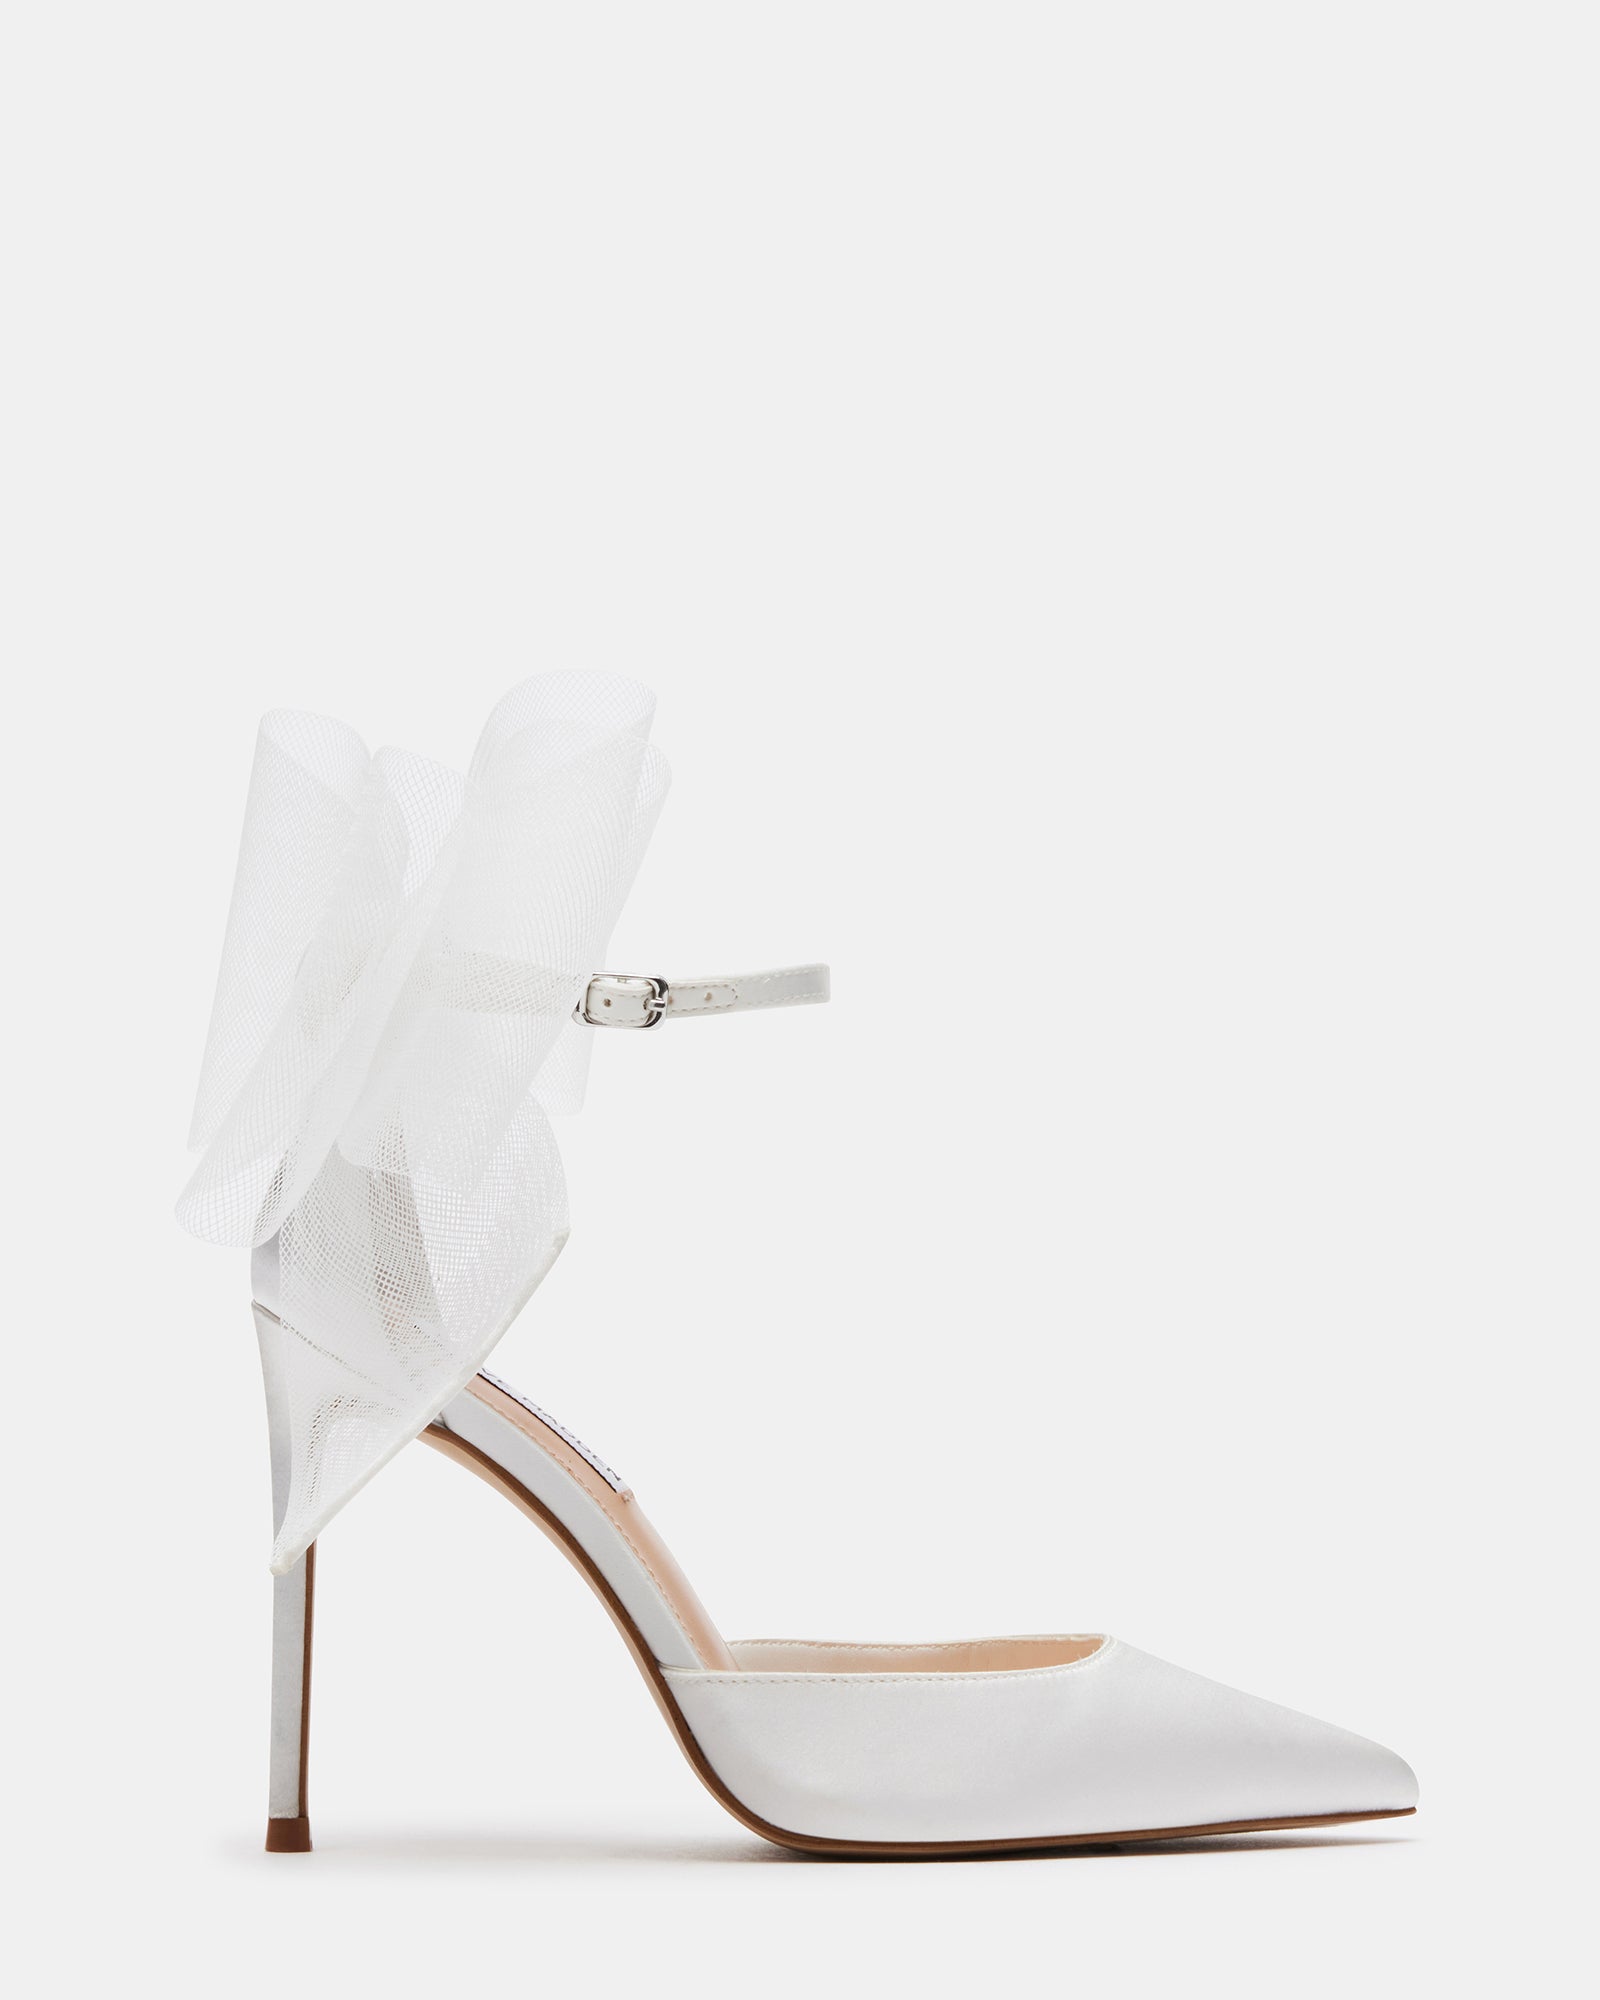 Steve Madden Utopia Metallic Butterfly Embellished Ankle Wrap Dress Sandals  | Dillard's